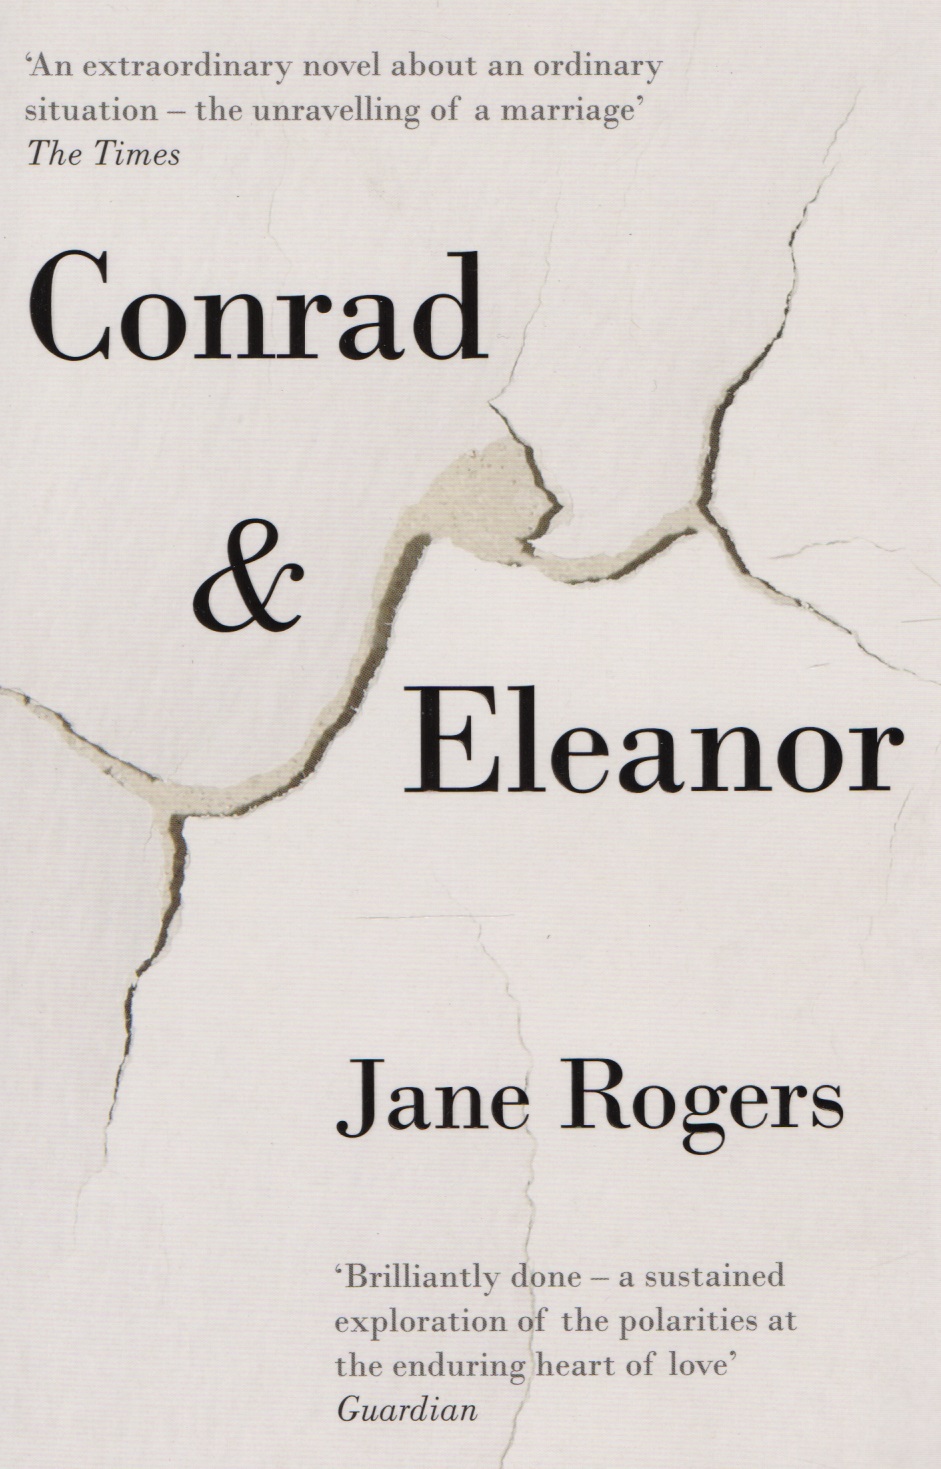 Rogers James Conrad & Eleanor